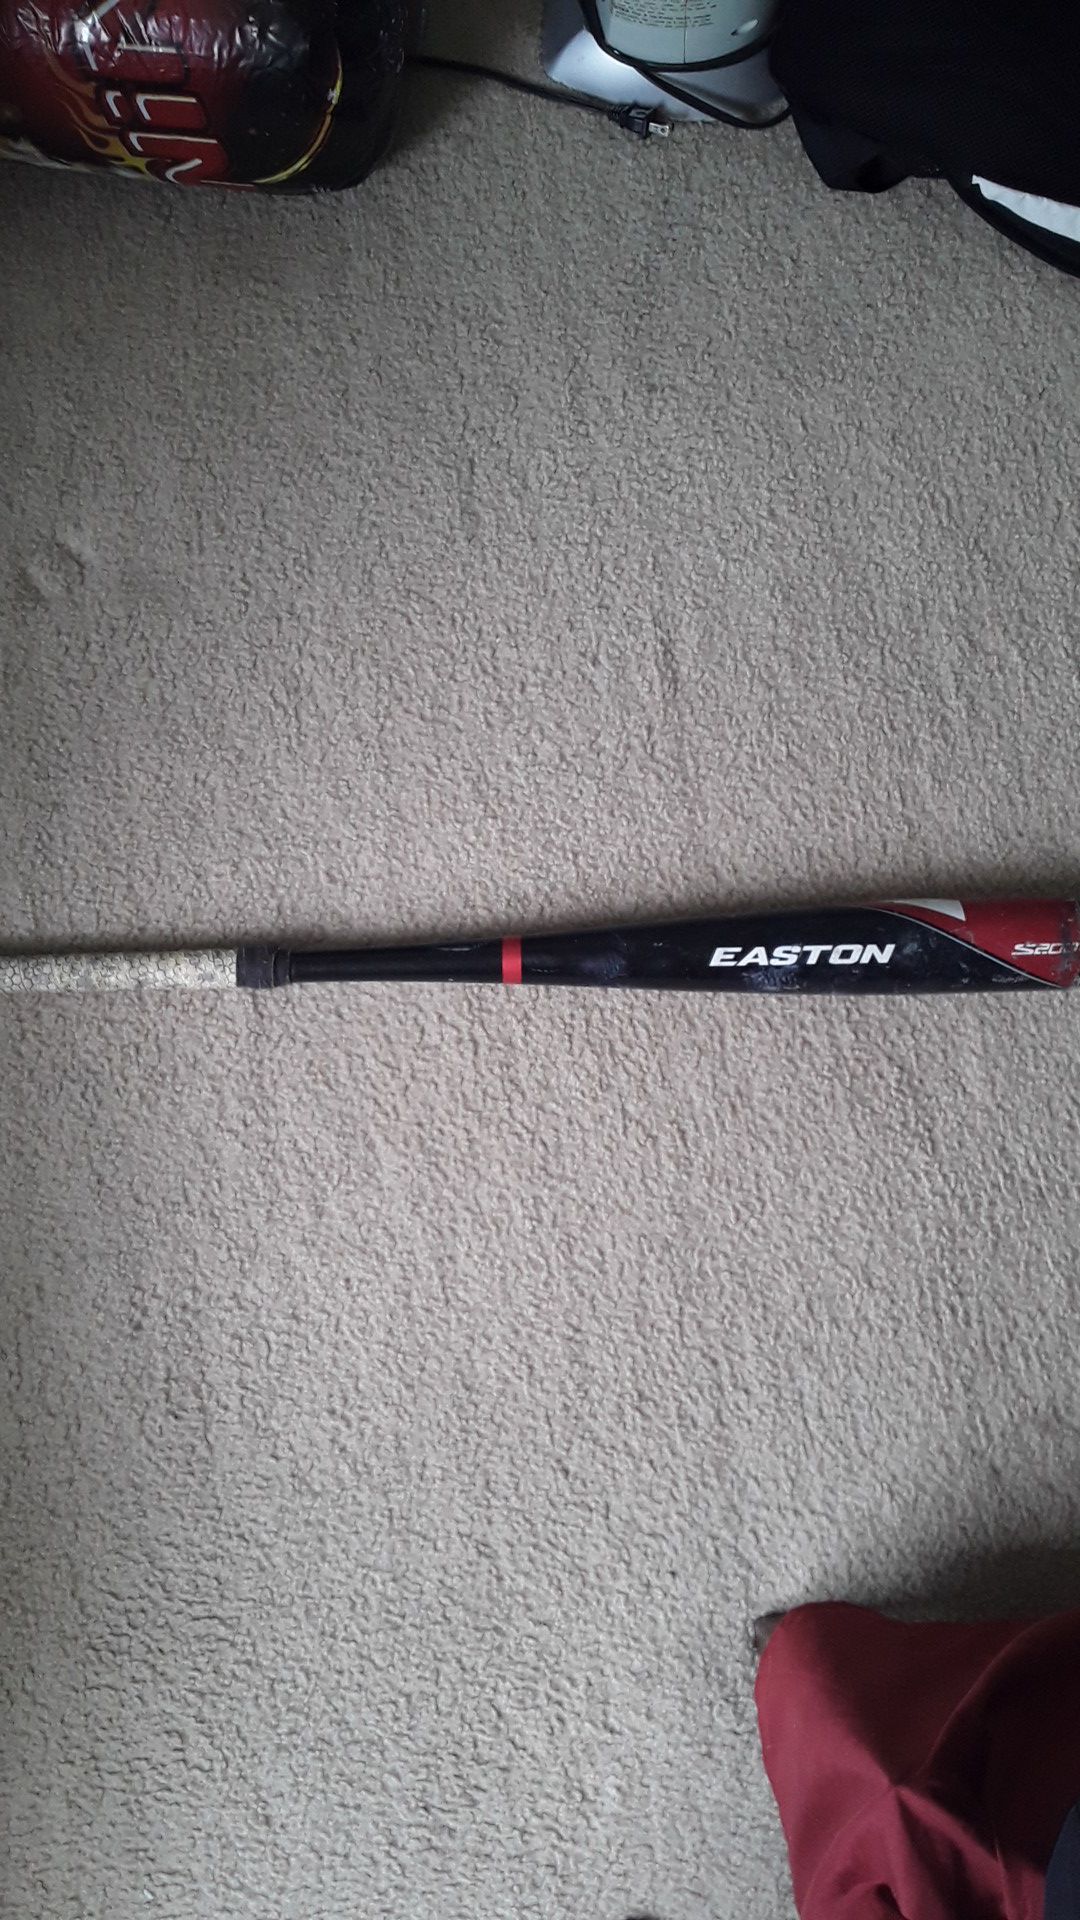 Easton 32in baseball bat